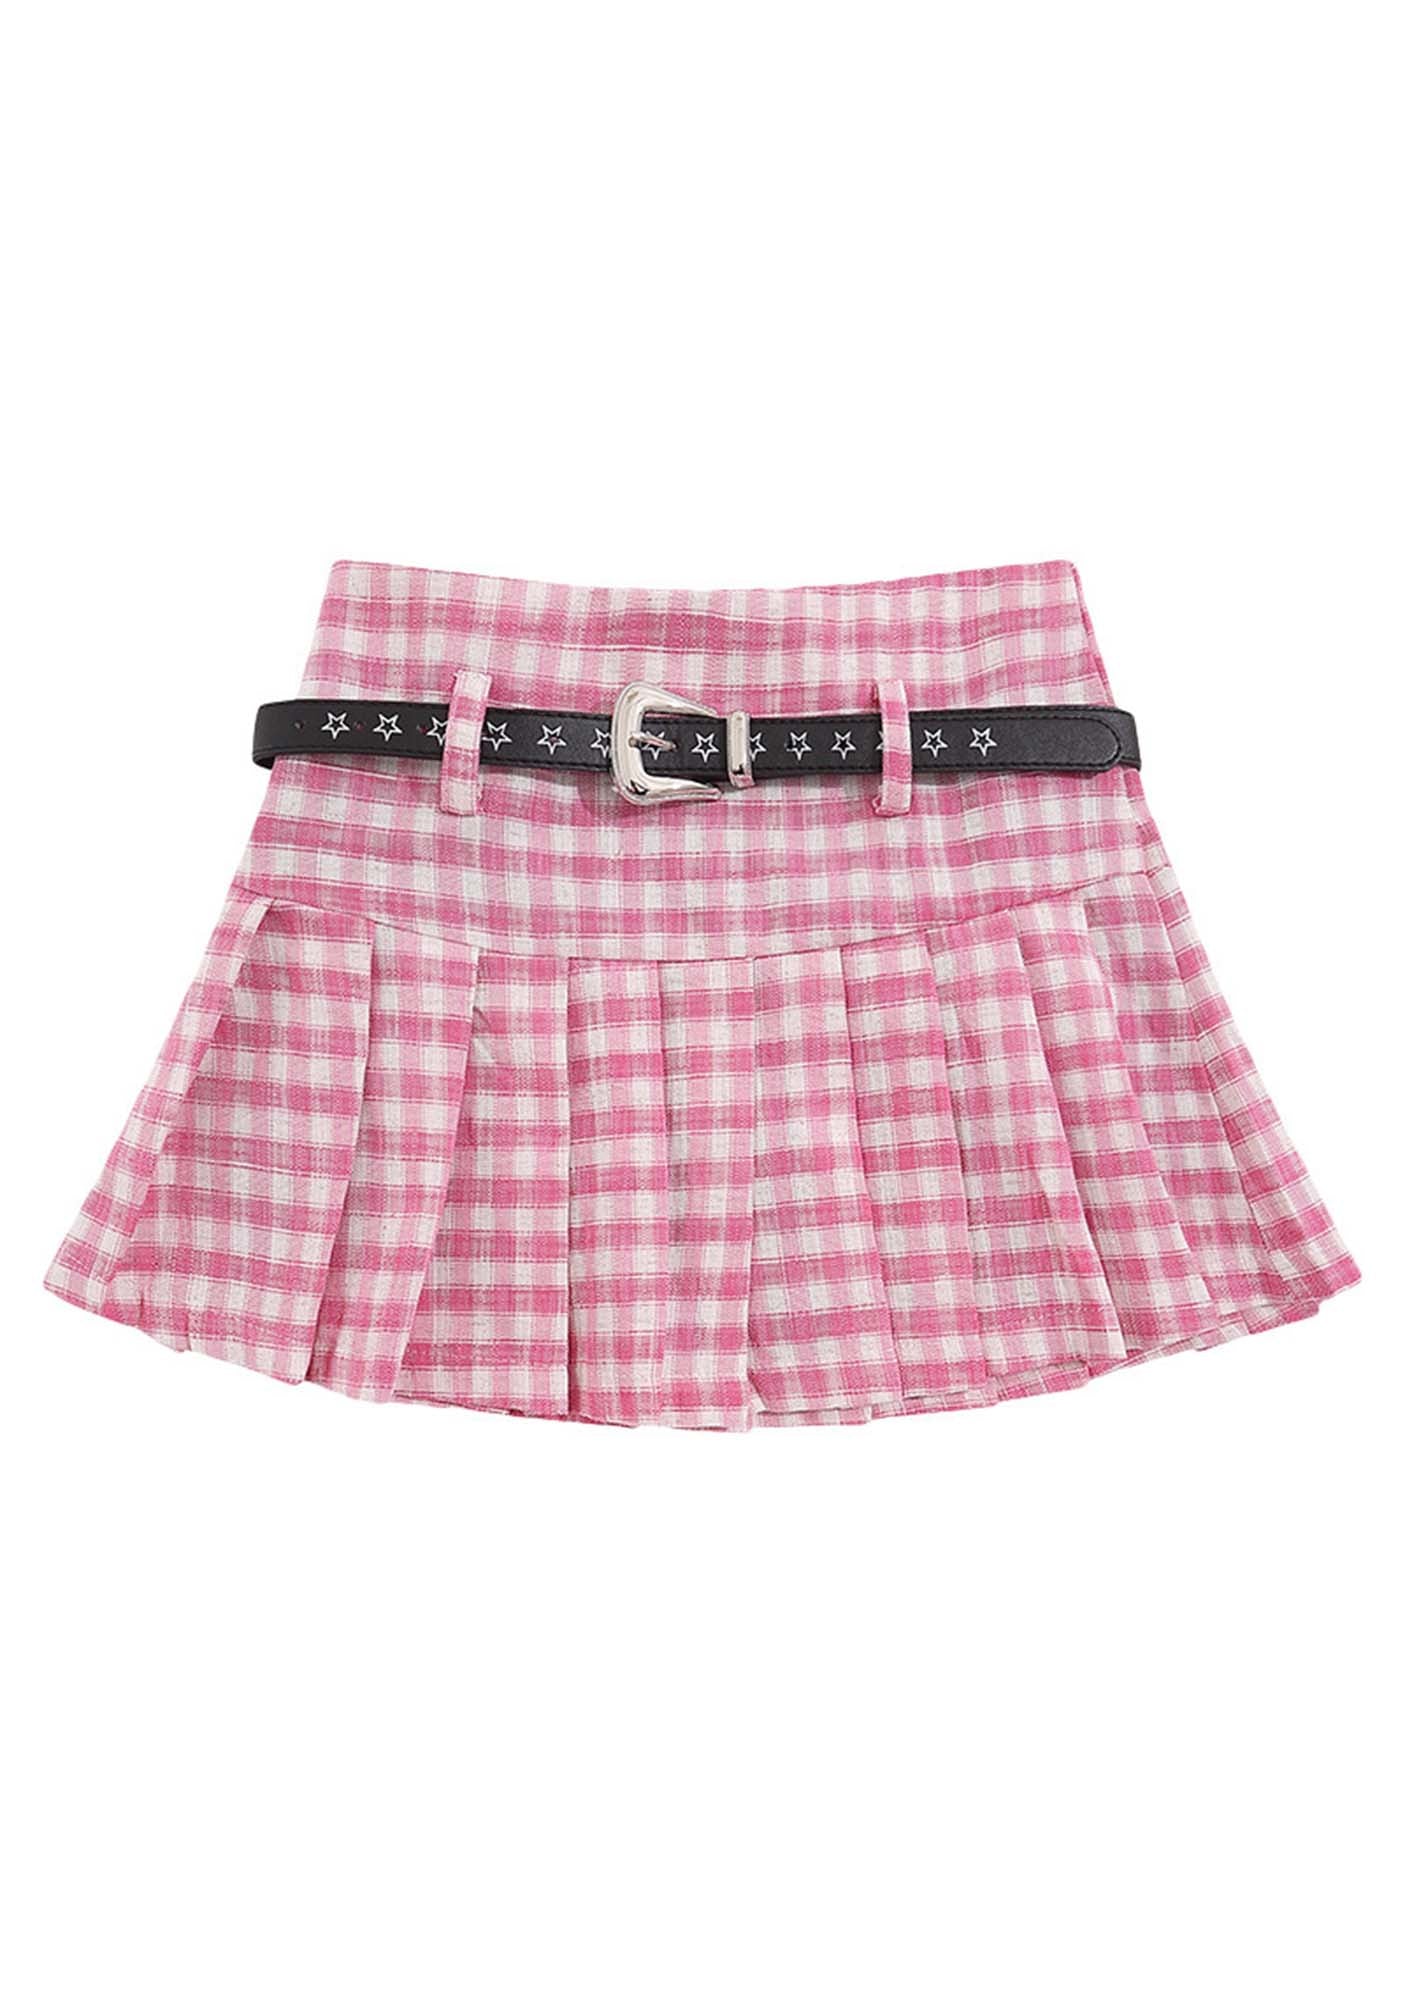 Cherrykitten Preppy High Waist Pleated Skirt for Sale